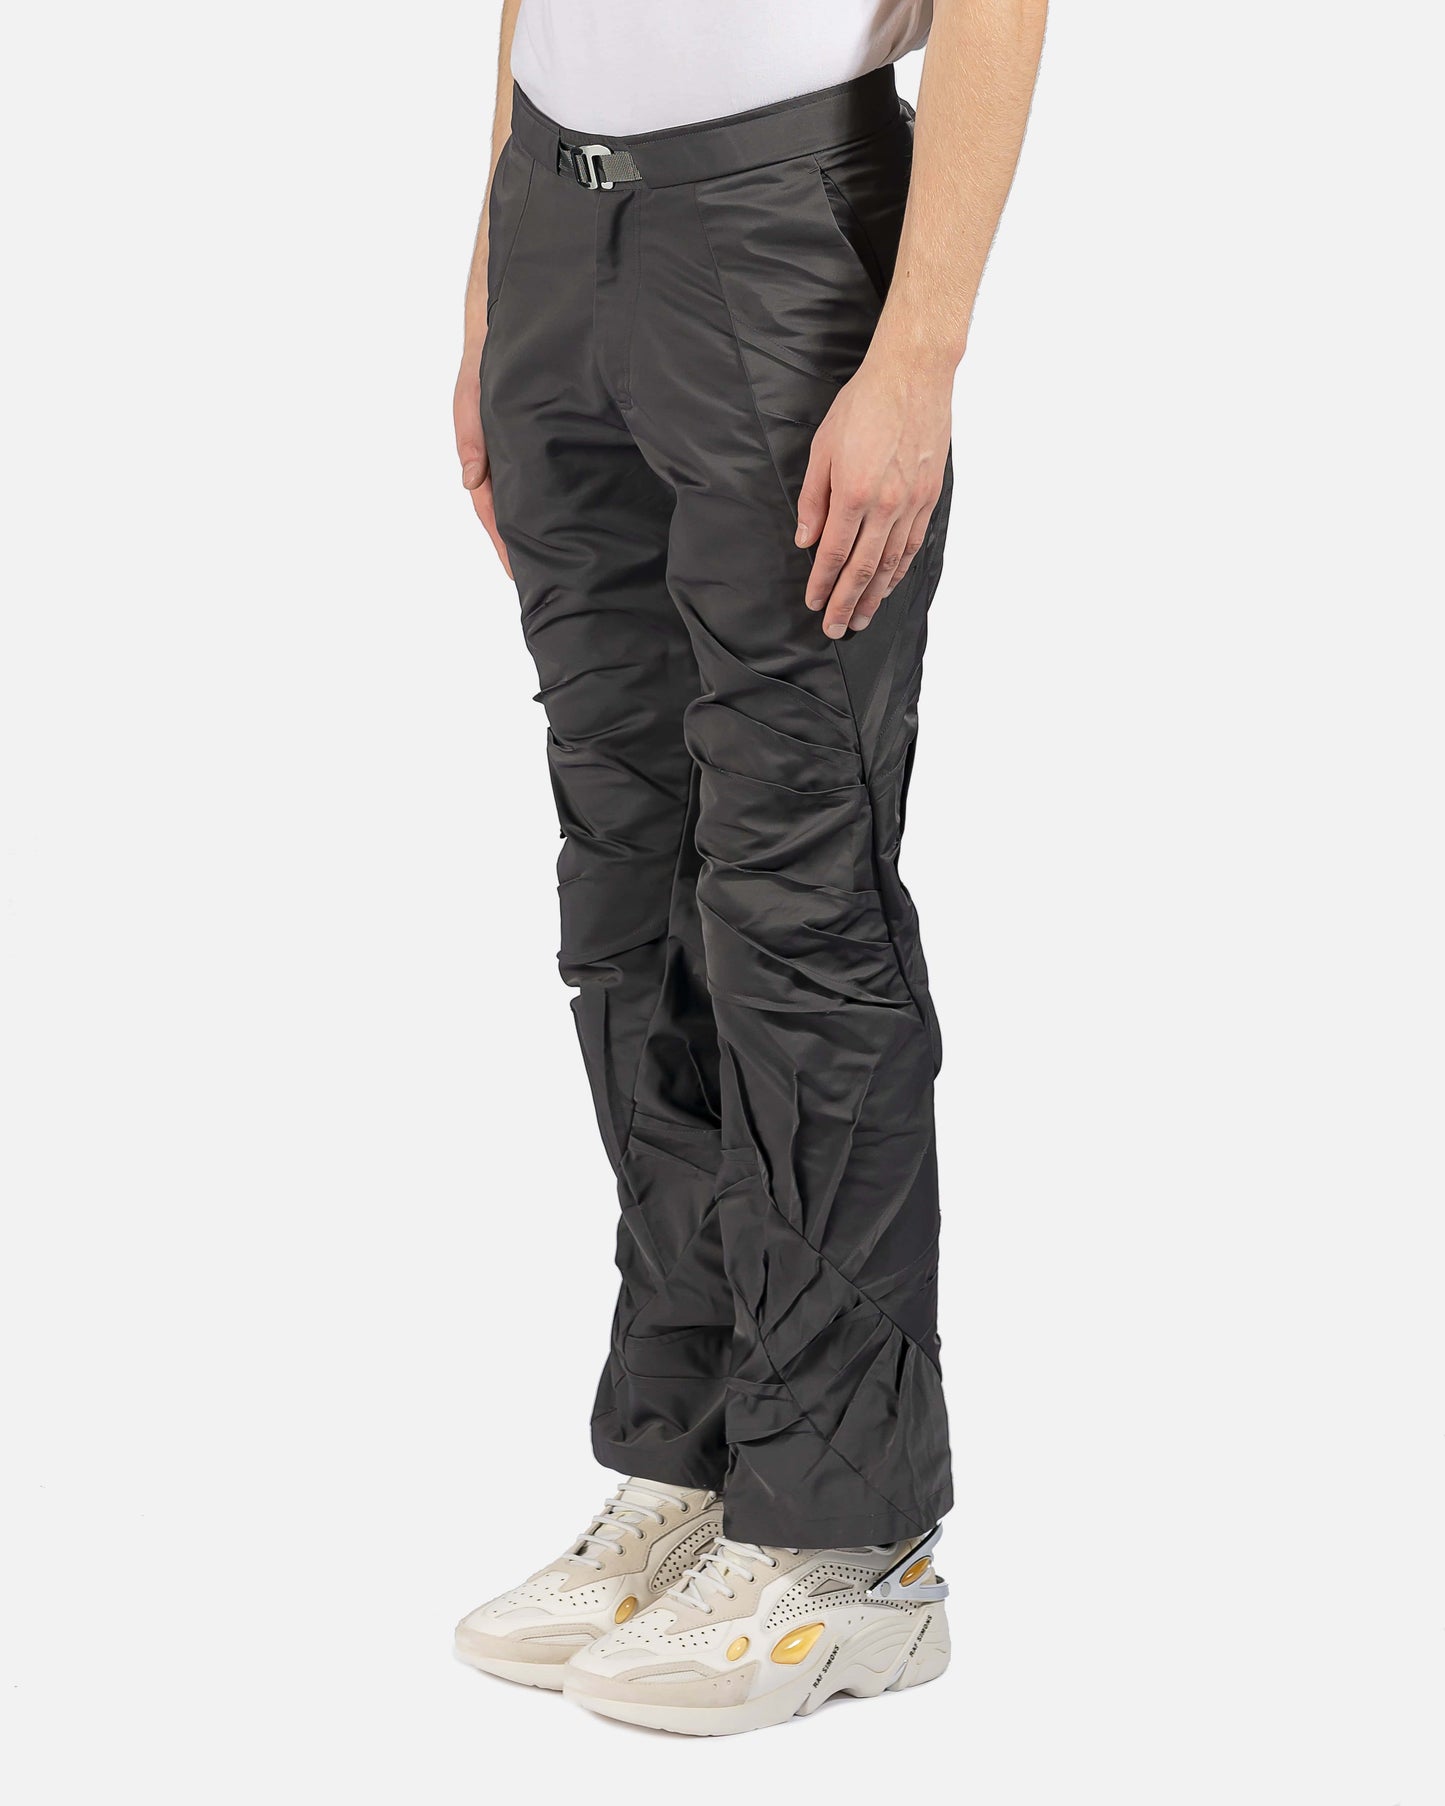 POST ARCHIVE FACTION (P.A.F) Men's Pants 4.0+ Technical Pants Left in Charcoal